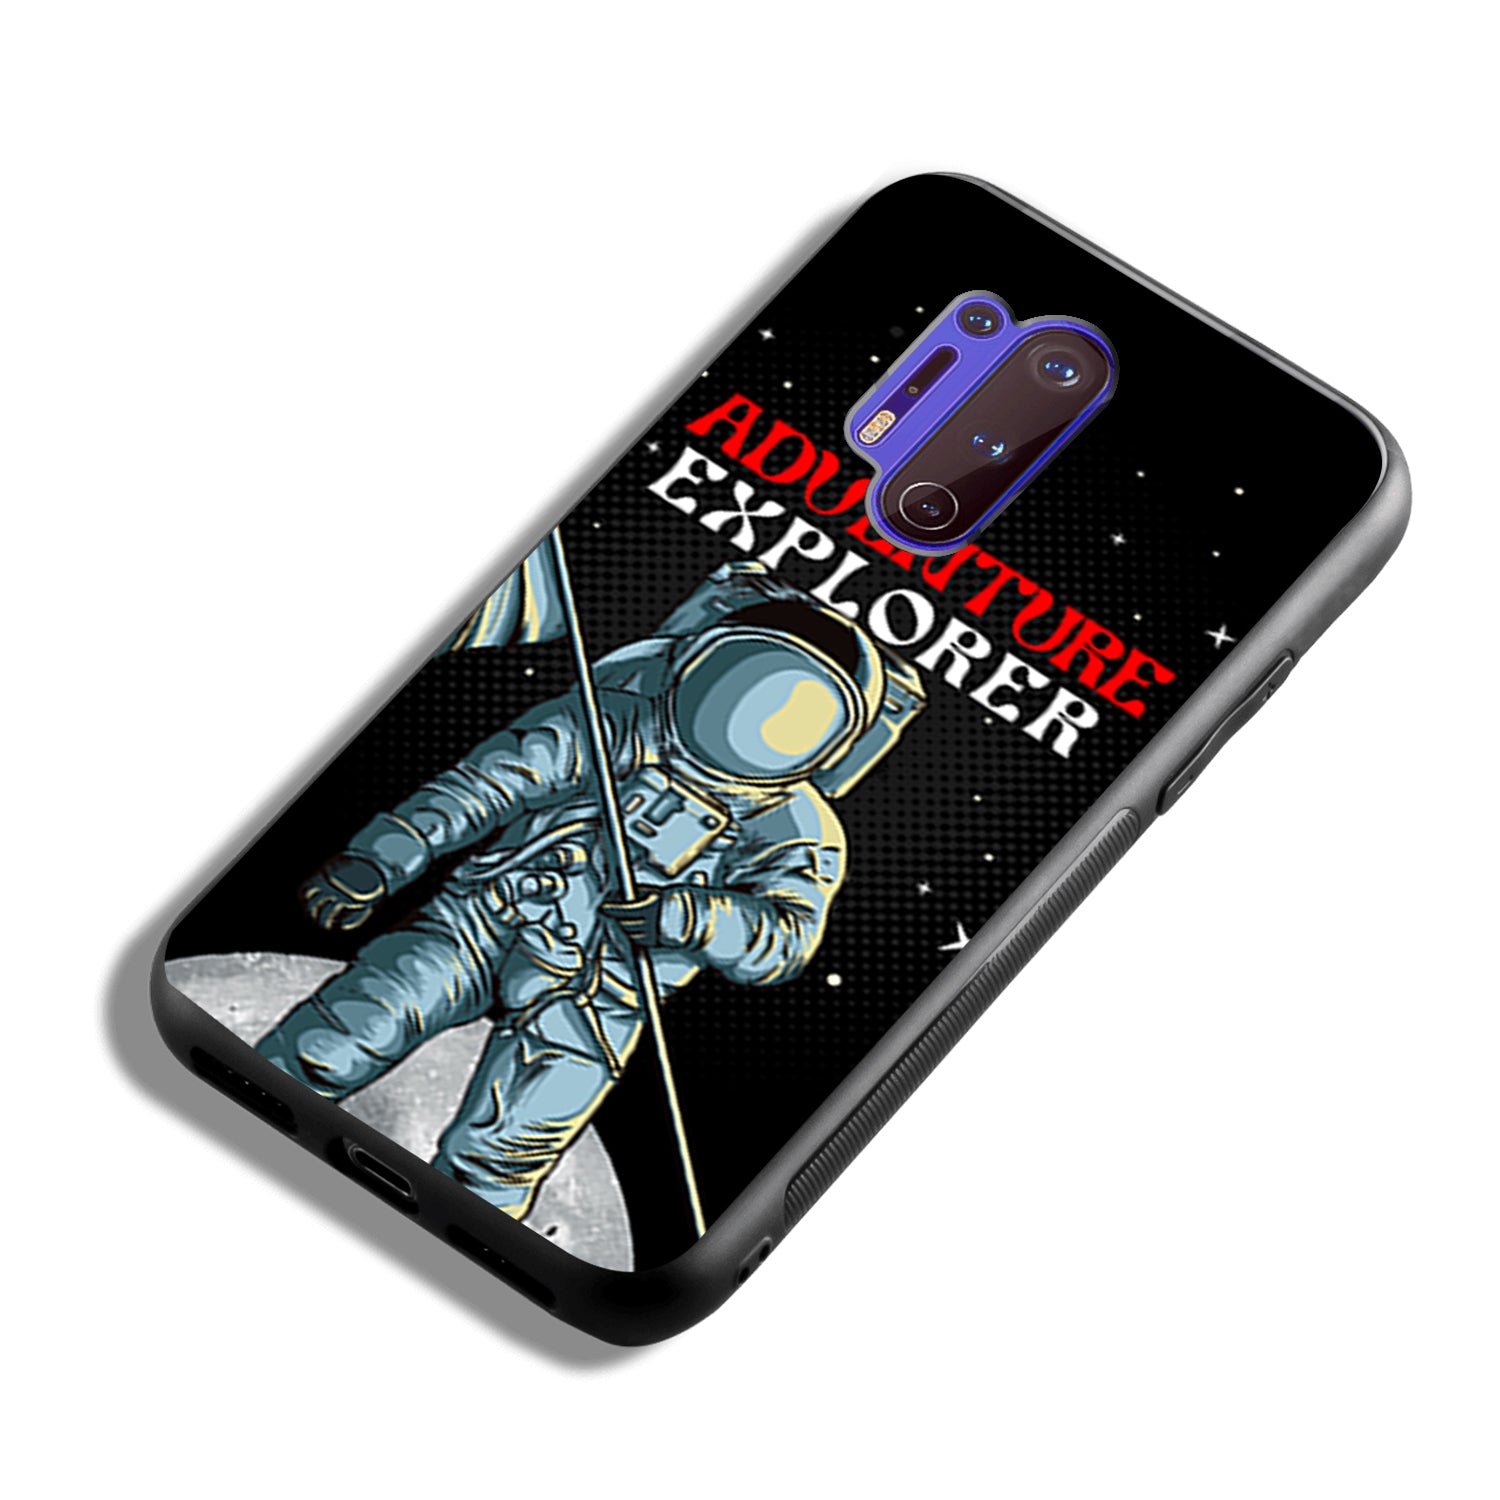 Adventure Explorer Space Oneplus 8 Pro Back Case